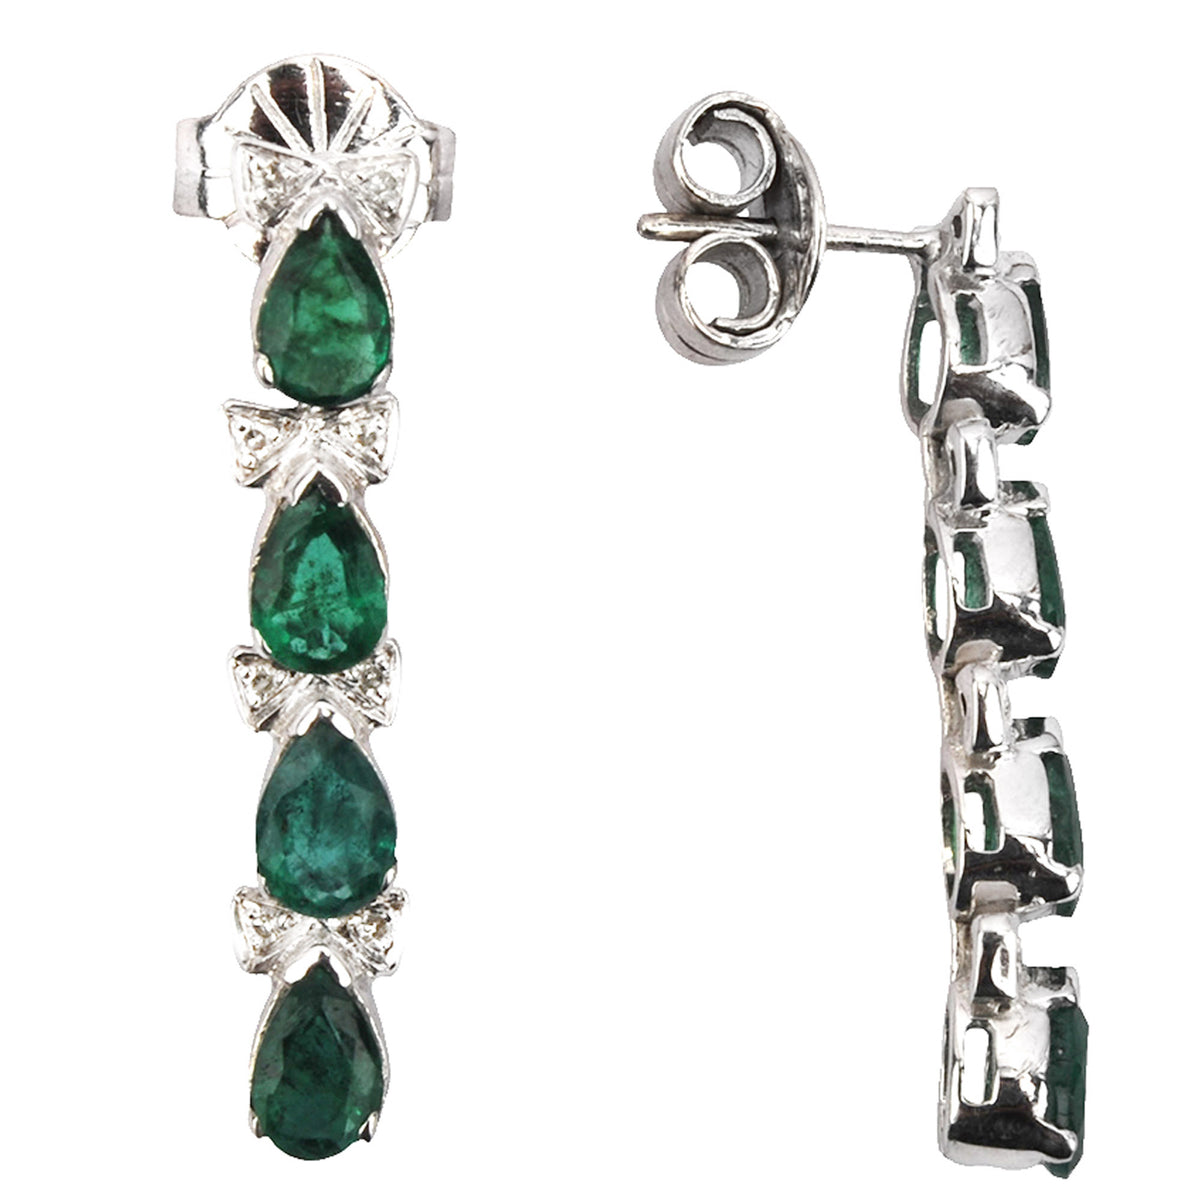 Pear cut emerald and diamond silver earrings